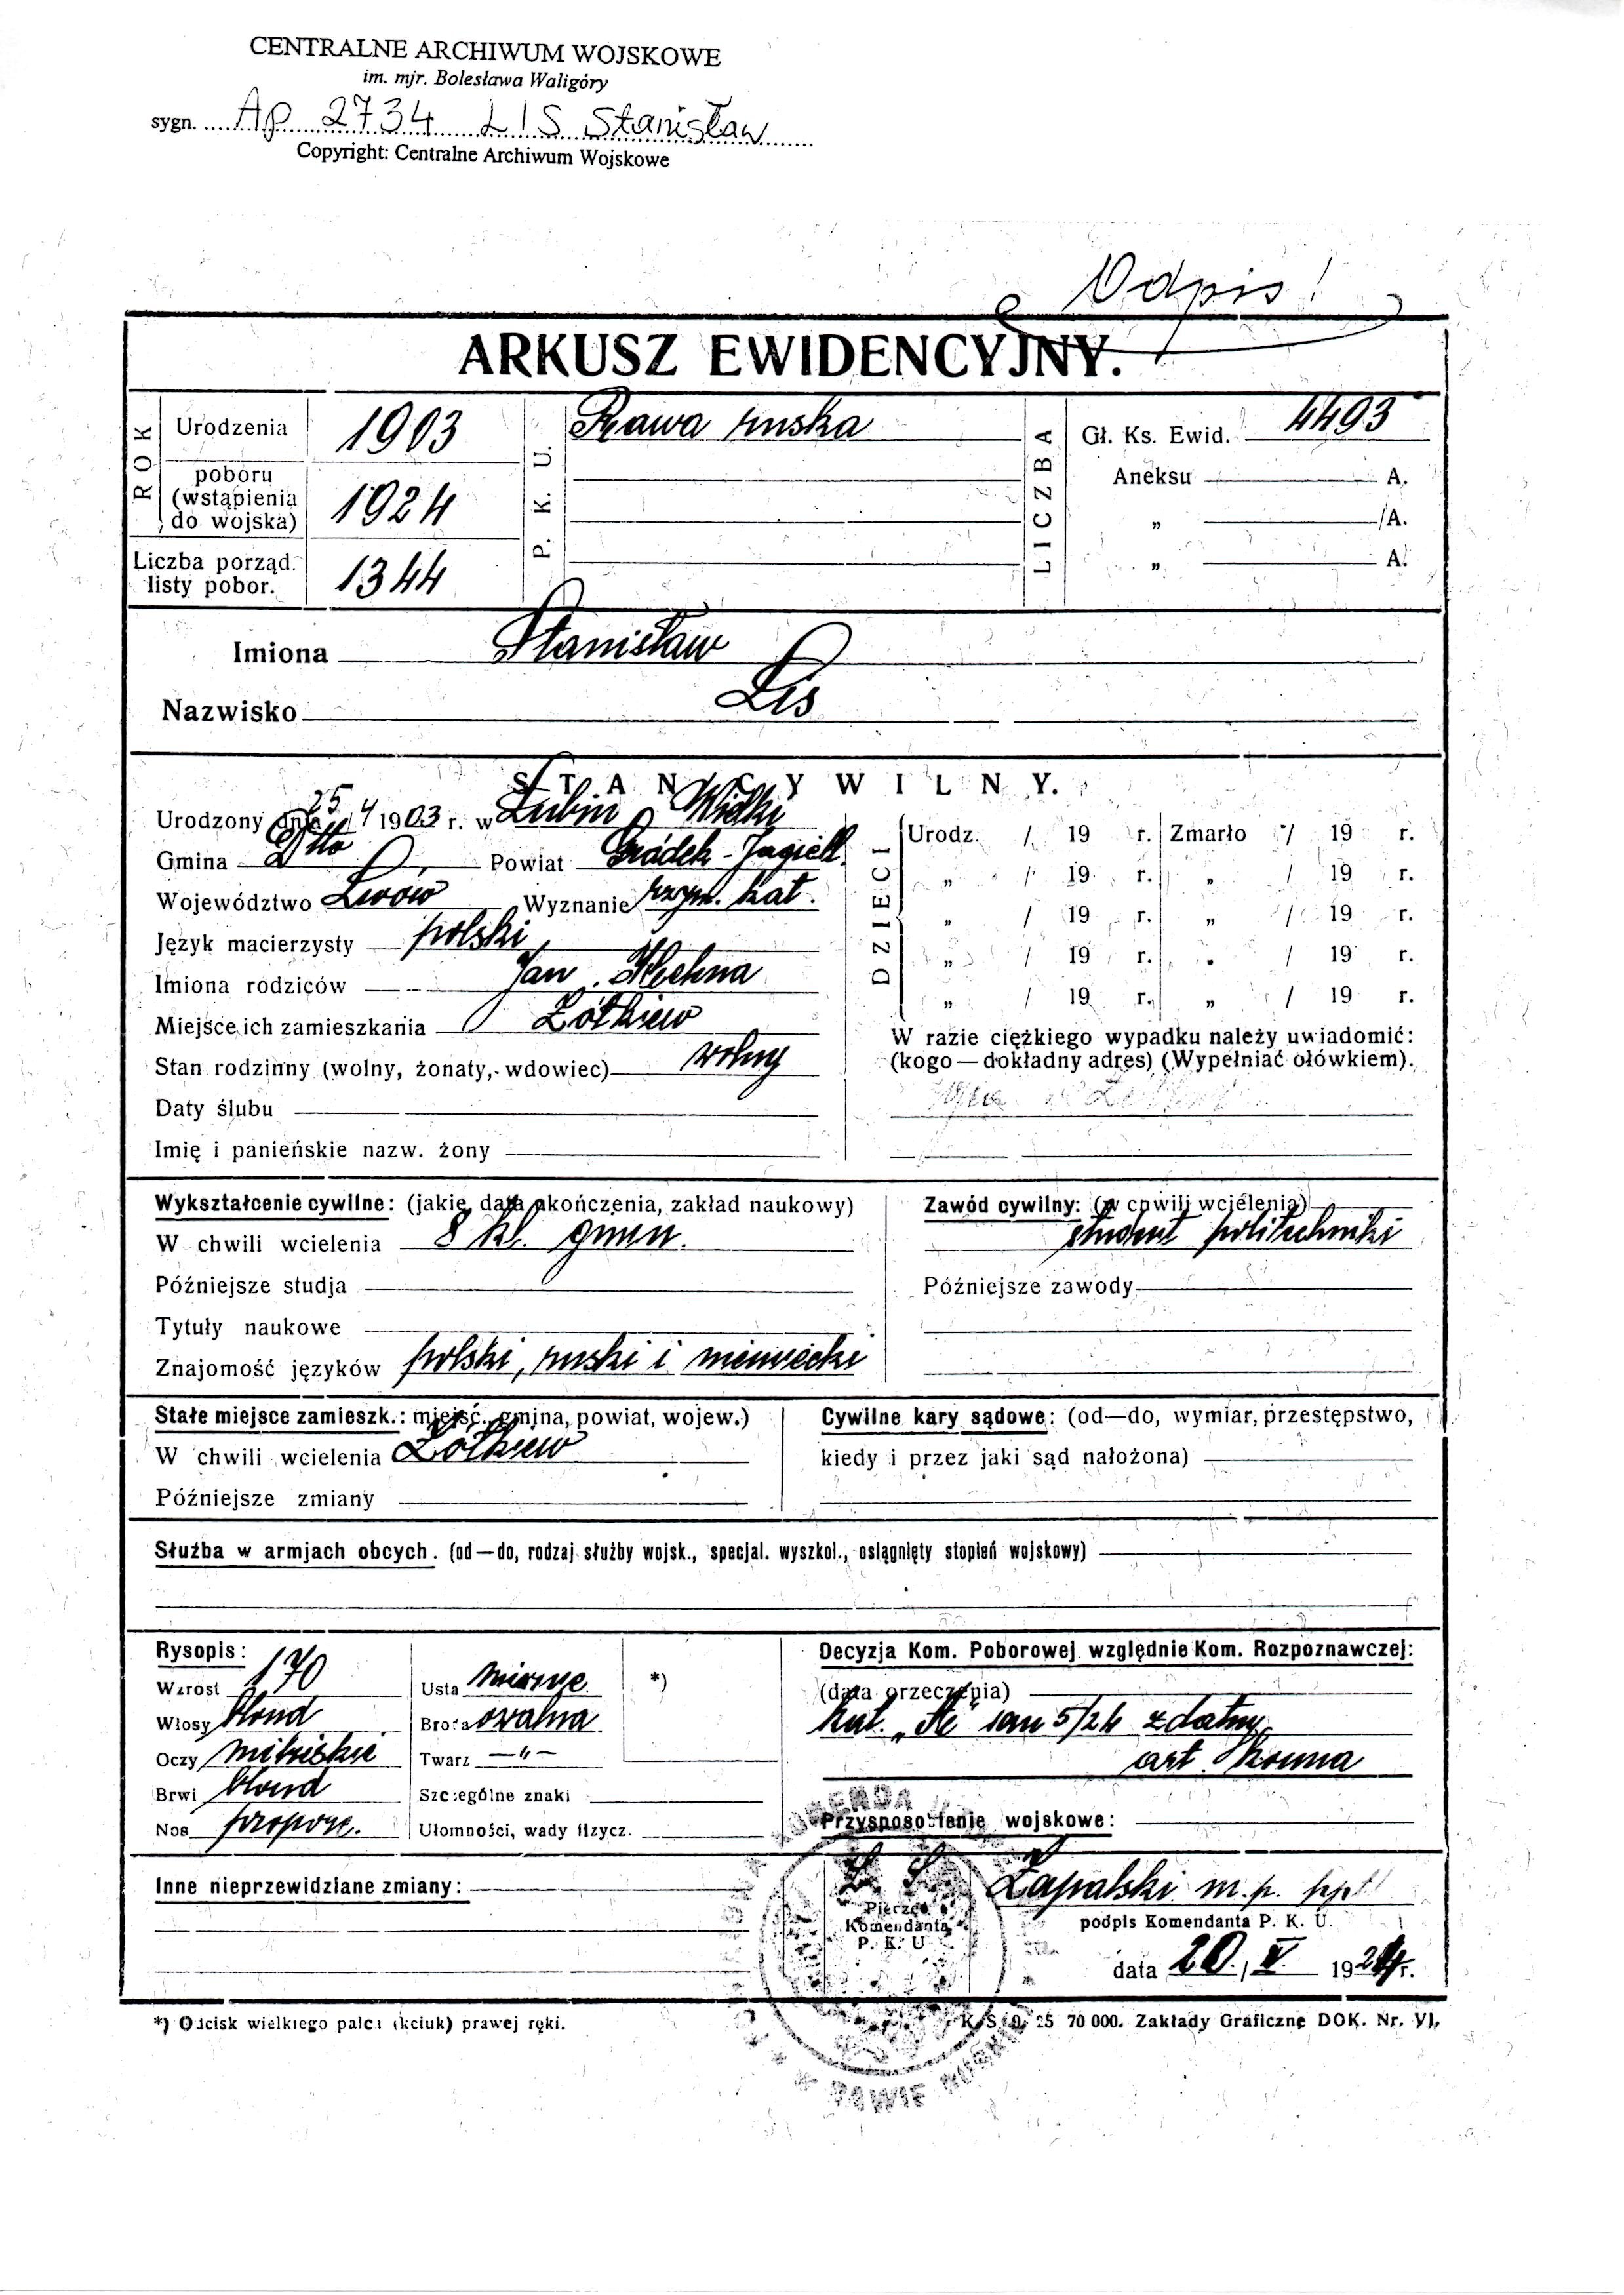 Stanislaw Lis handwritten Document RECORD Rawa Ruska 1924 page 1.jpg